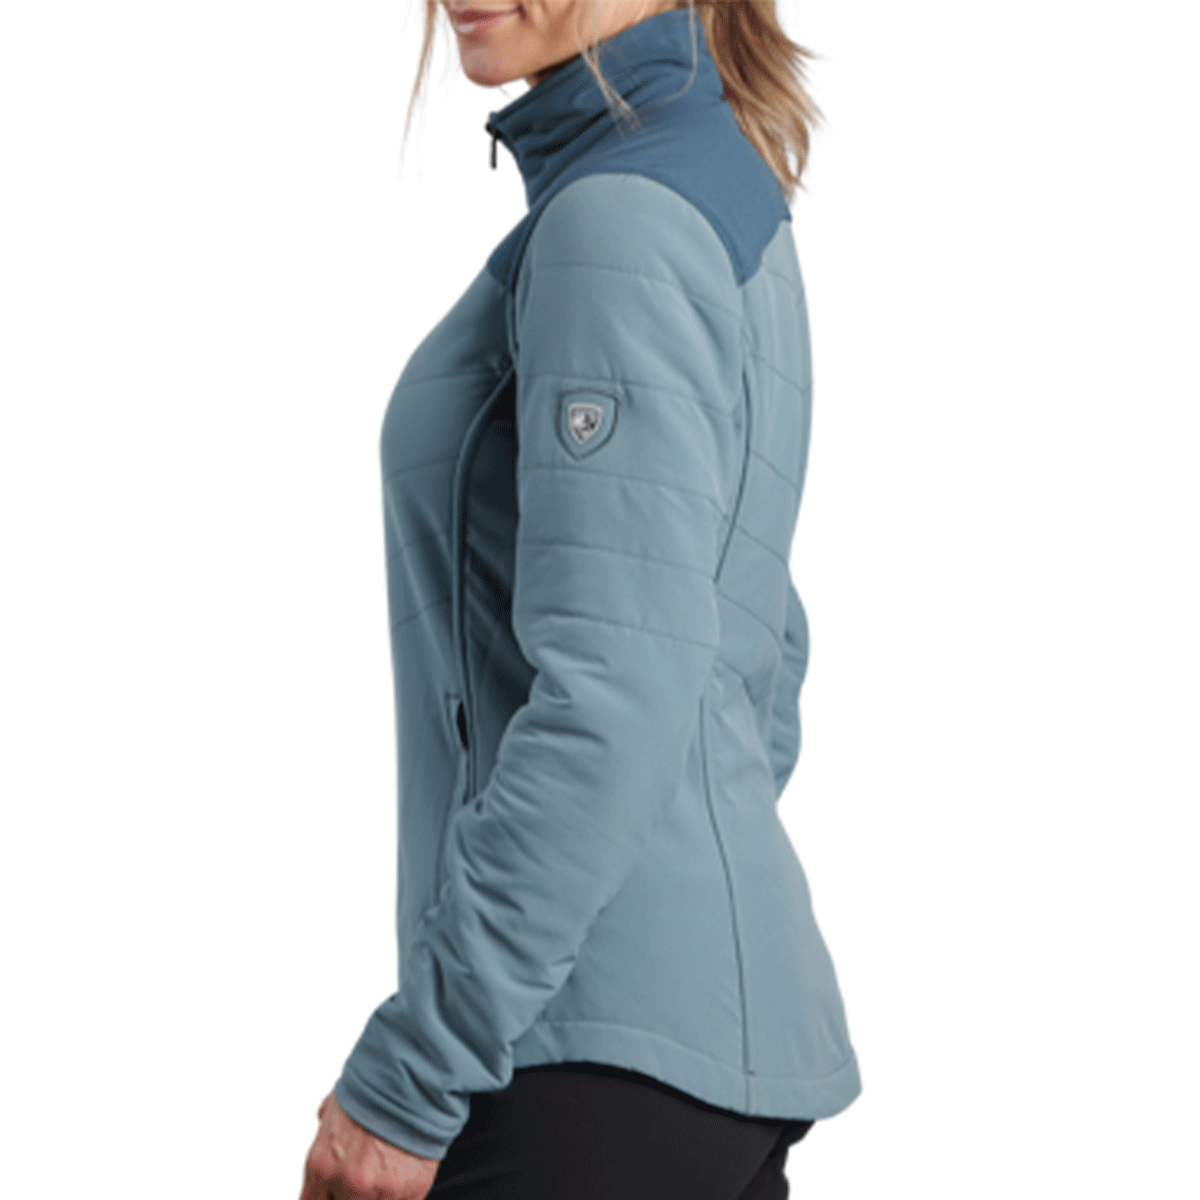 Kuhl Organic Cotton Athletic Jackets for Women